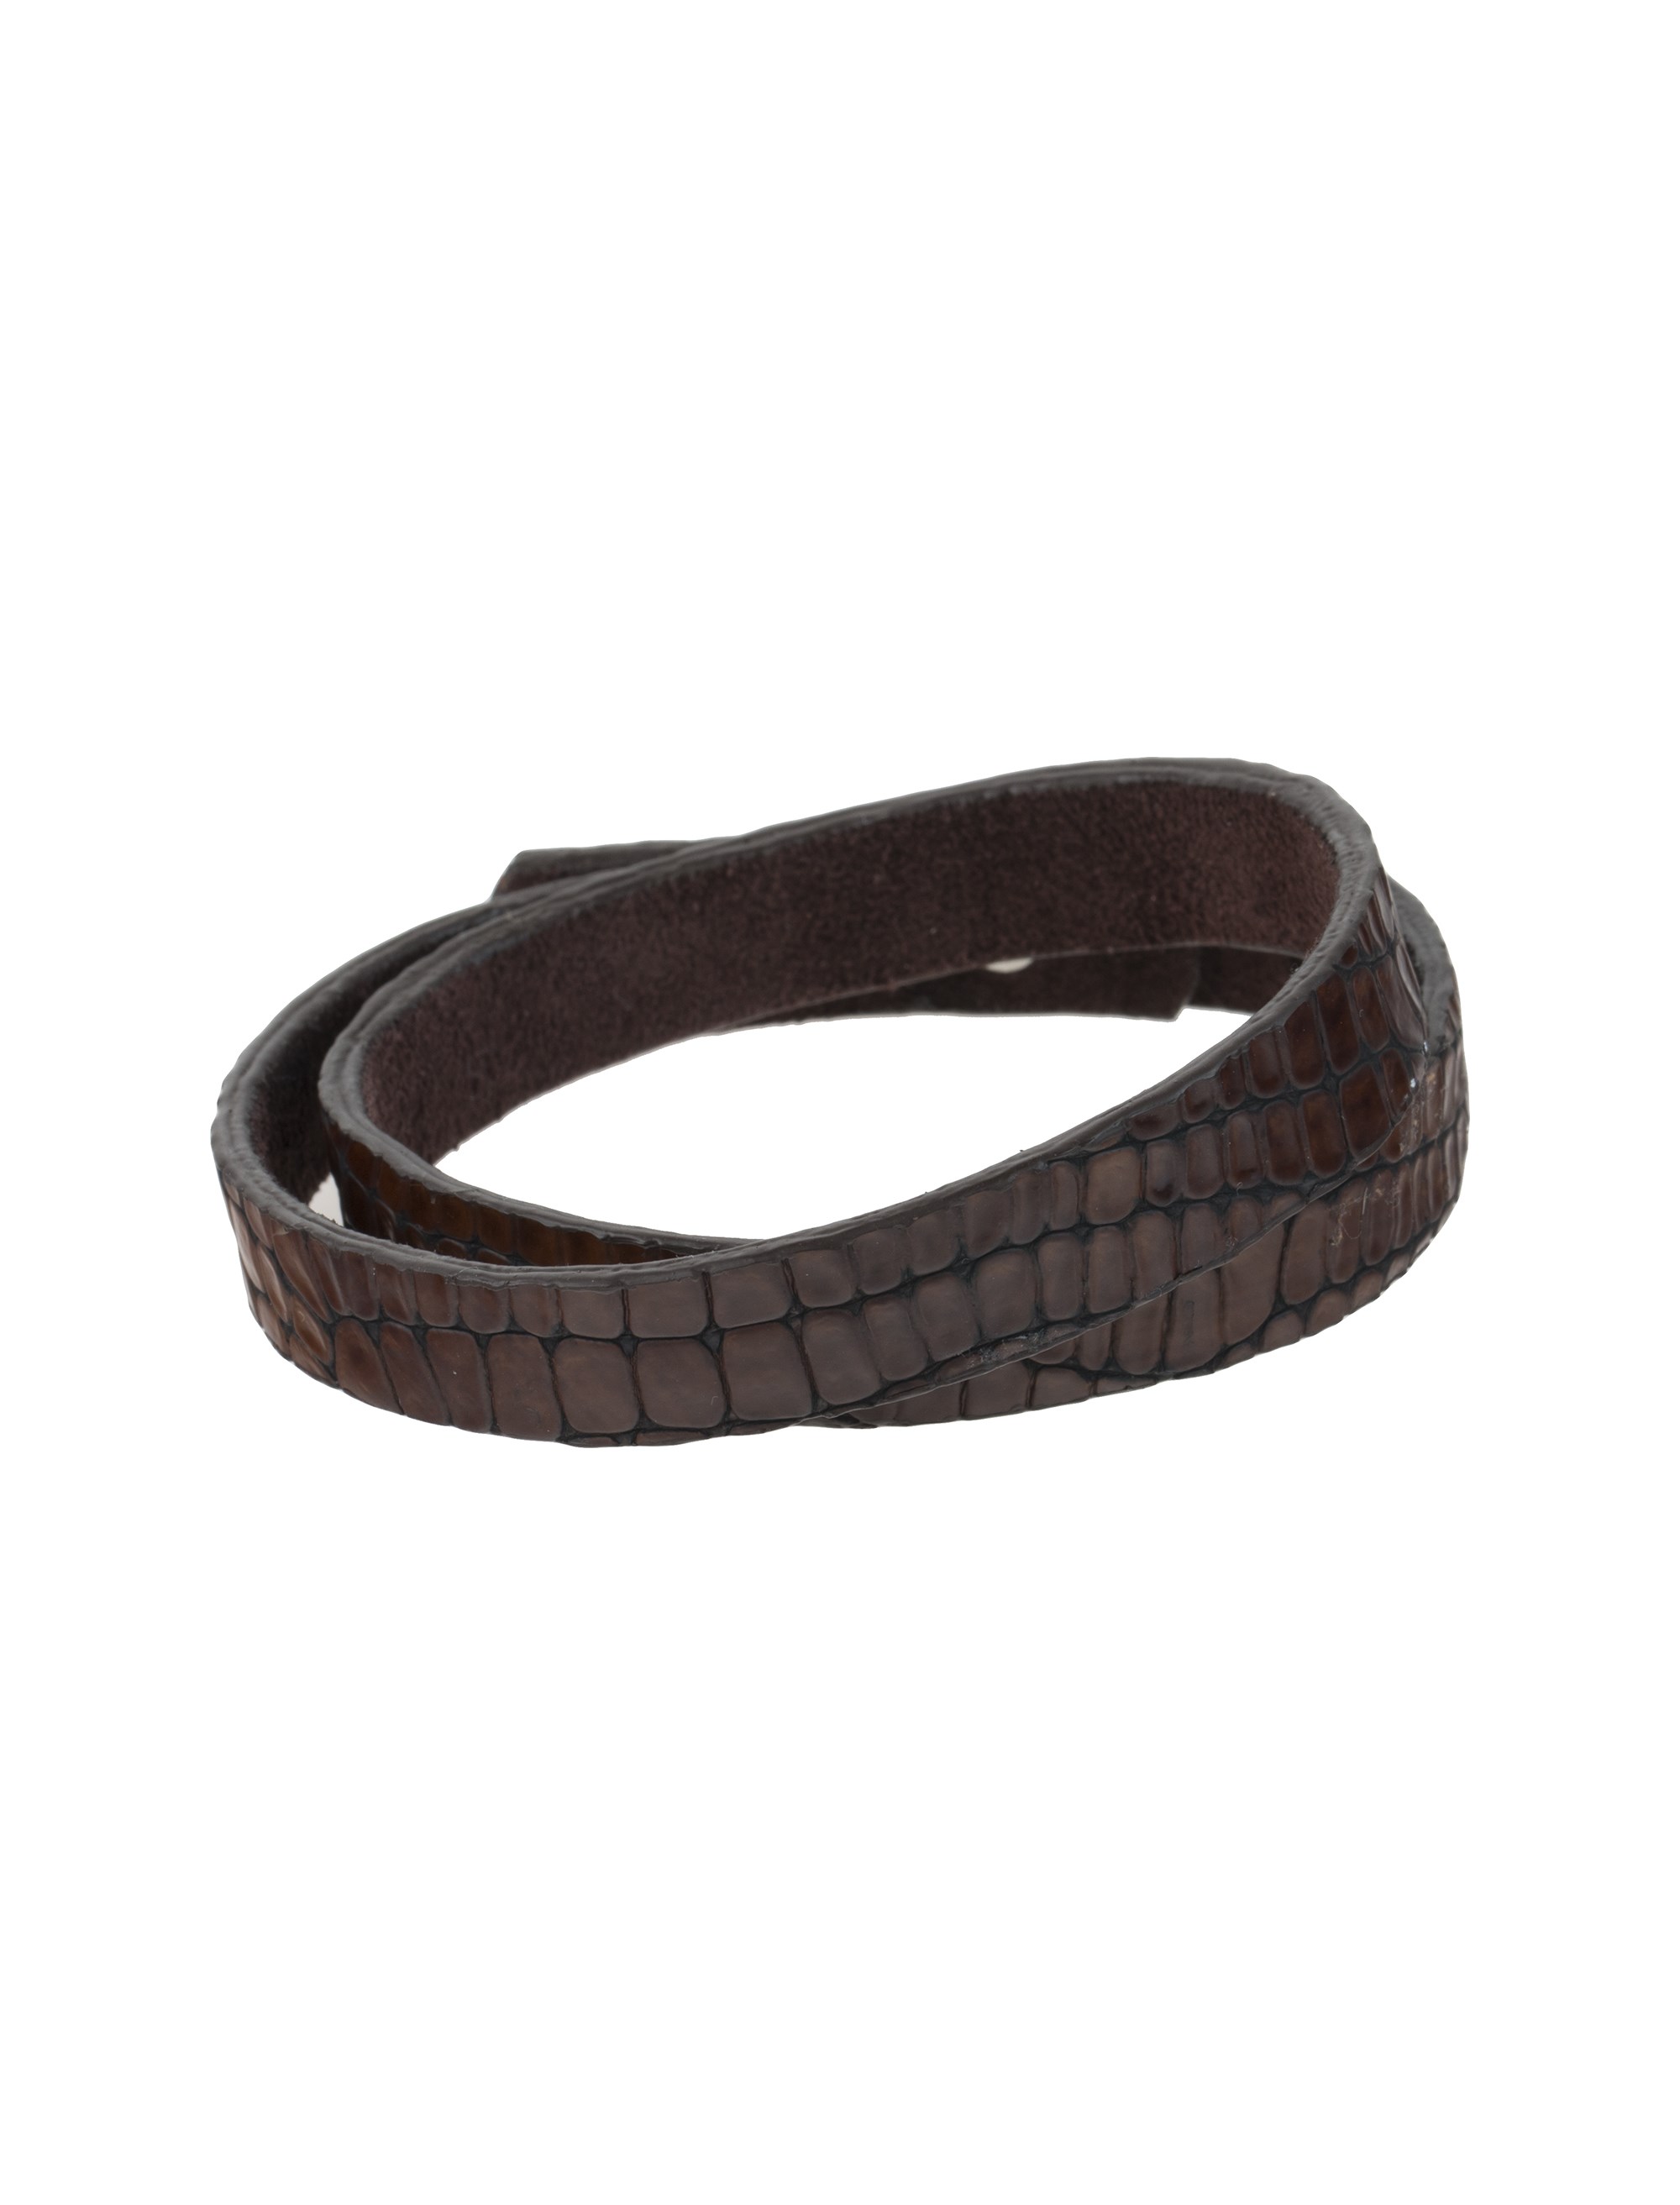 دستبند چرم مردانه - ماکو دیزاین تک سایز